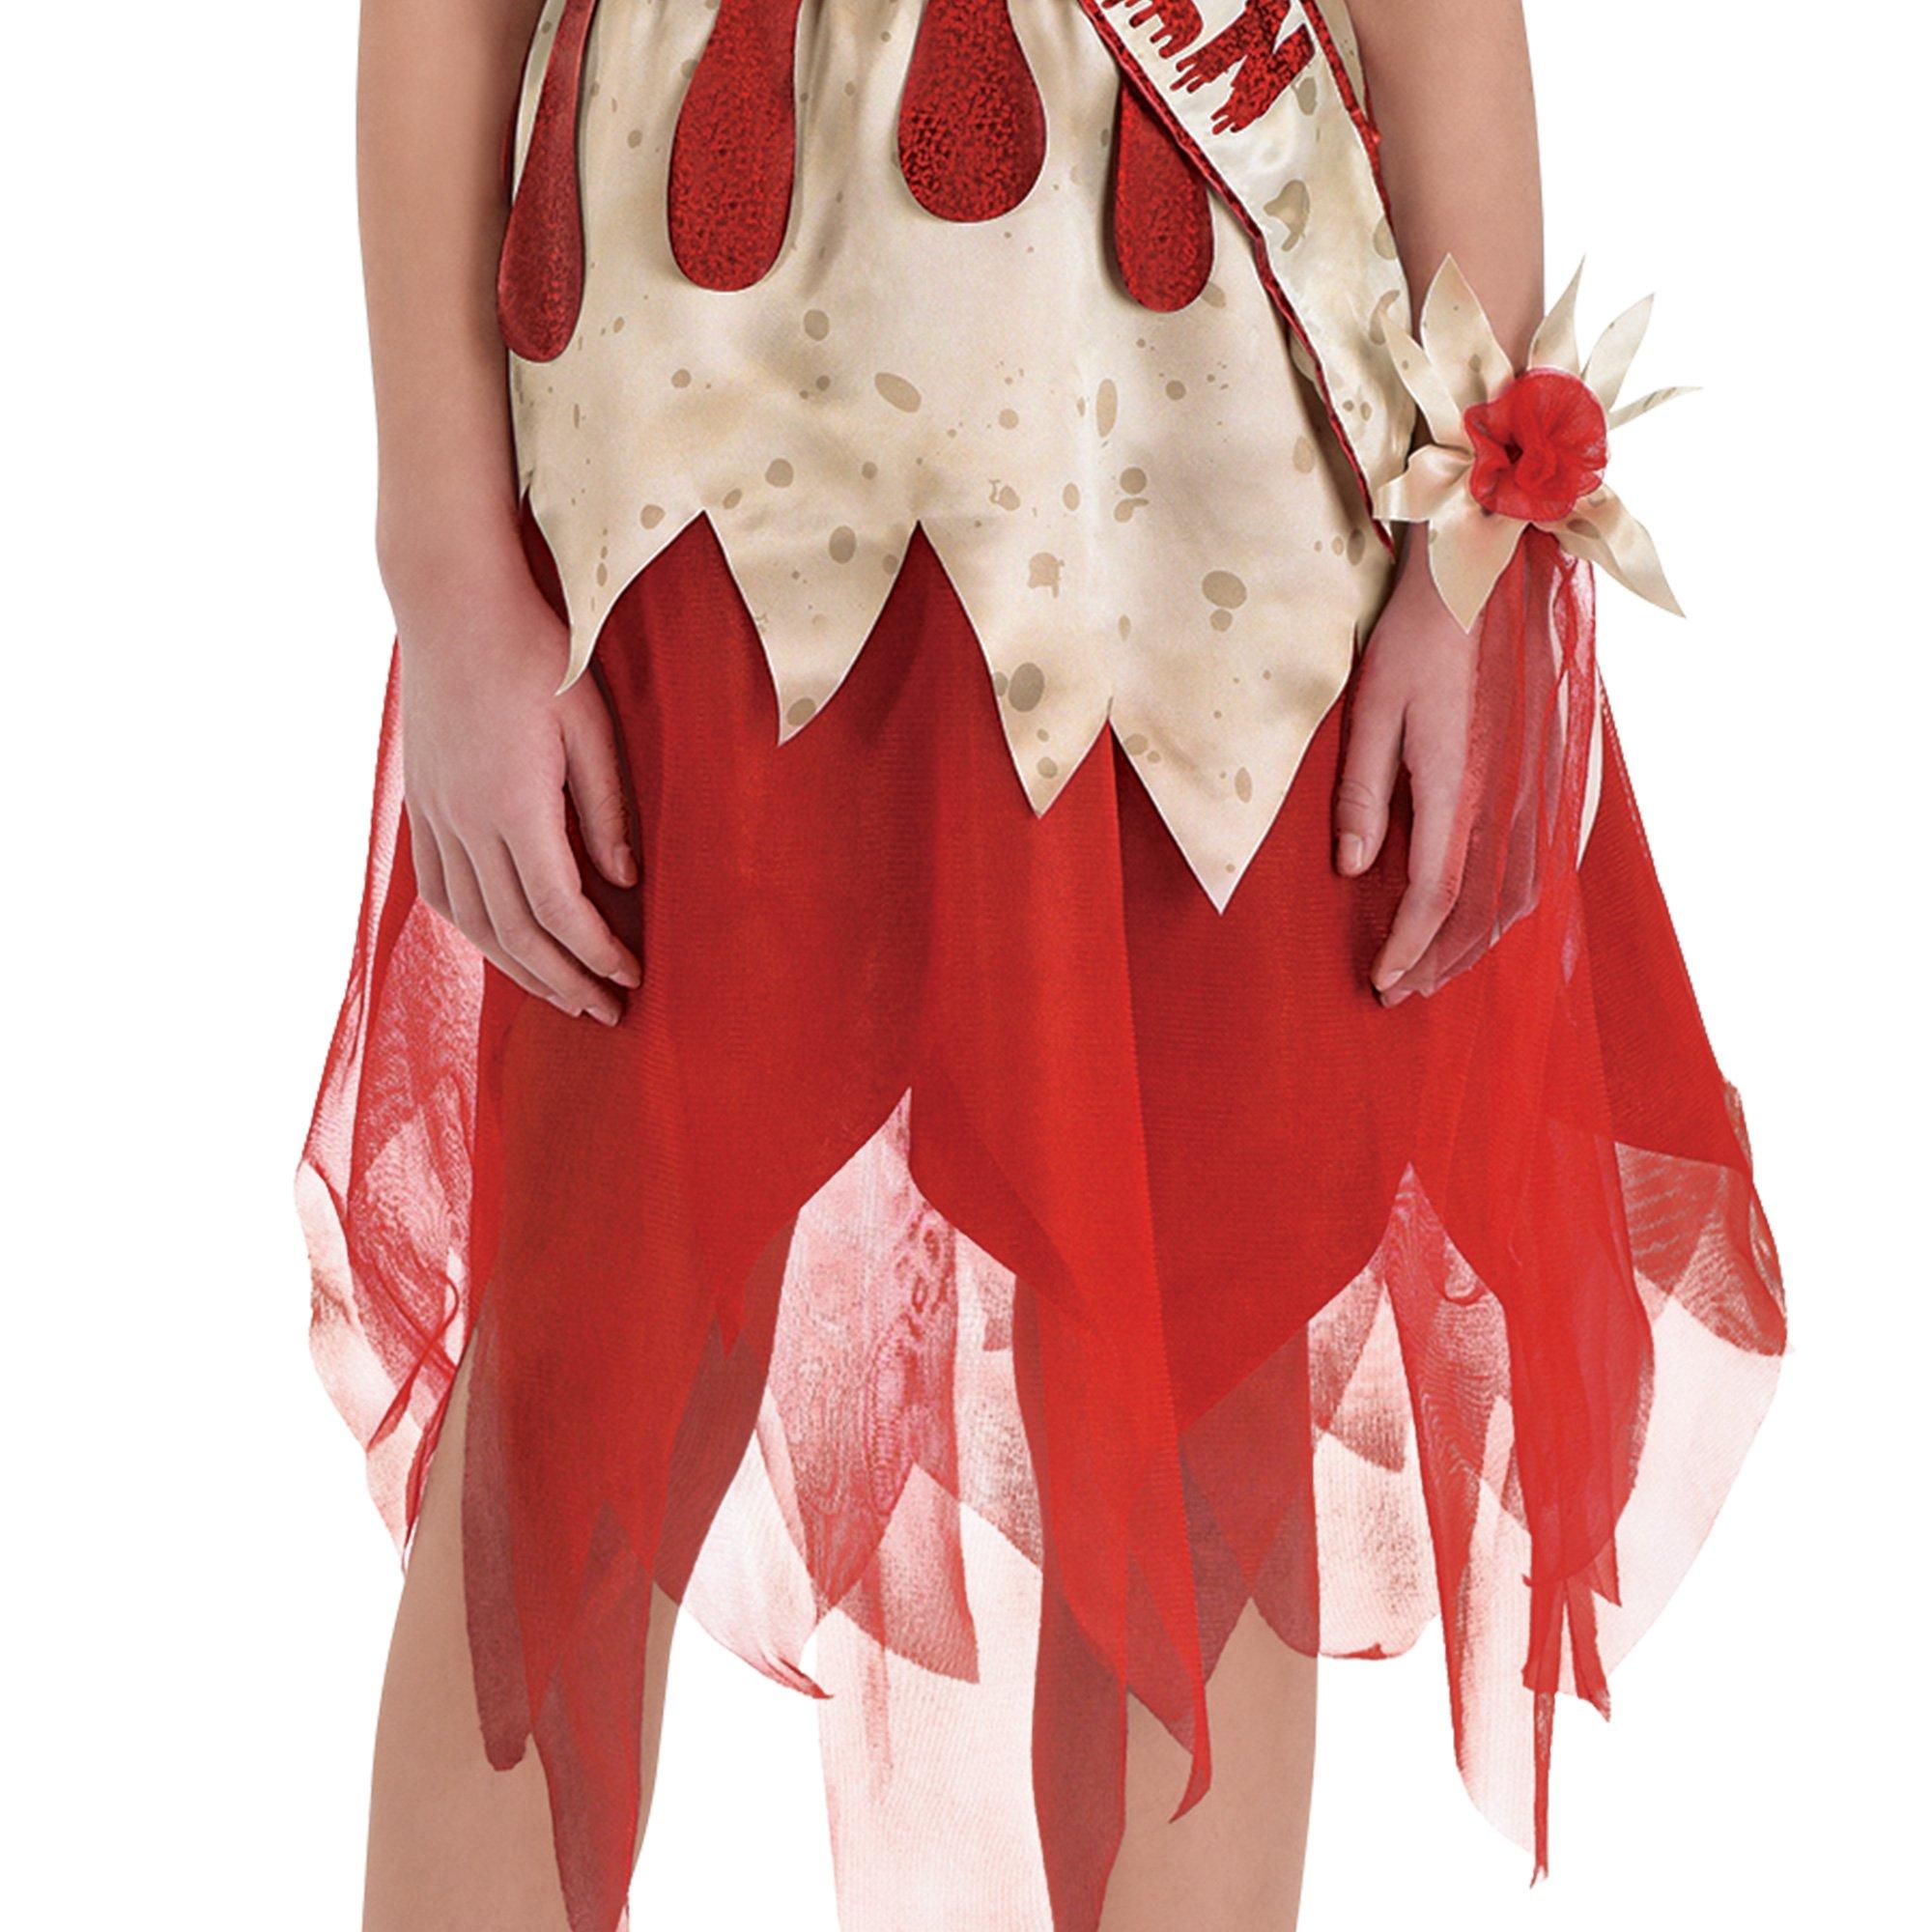 Kids' Scream Queen Costume